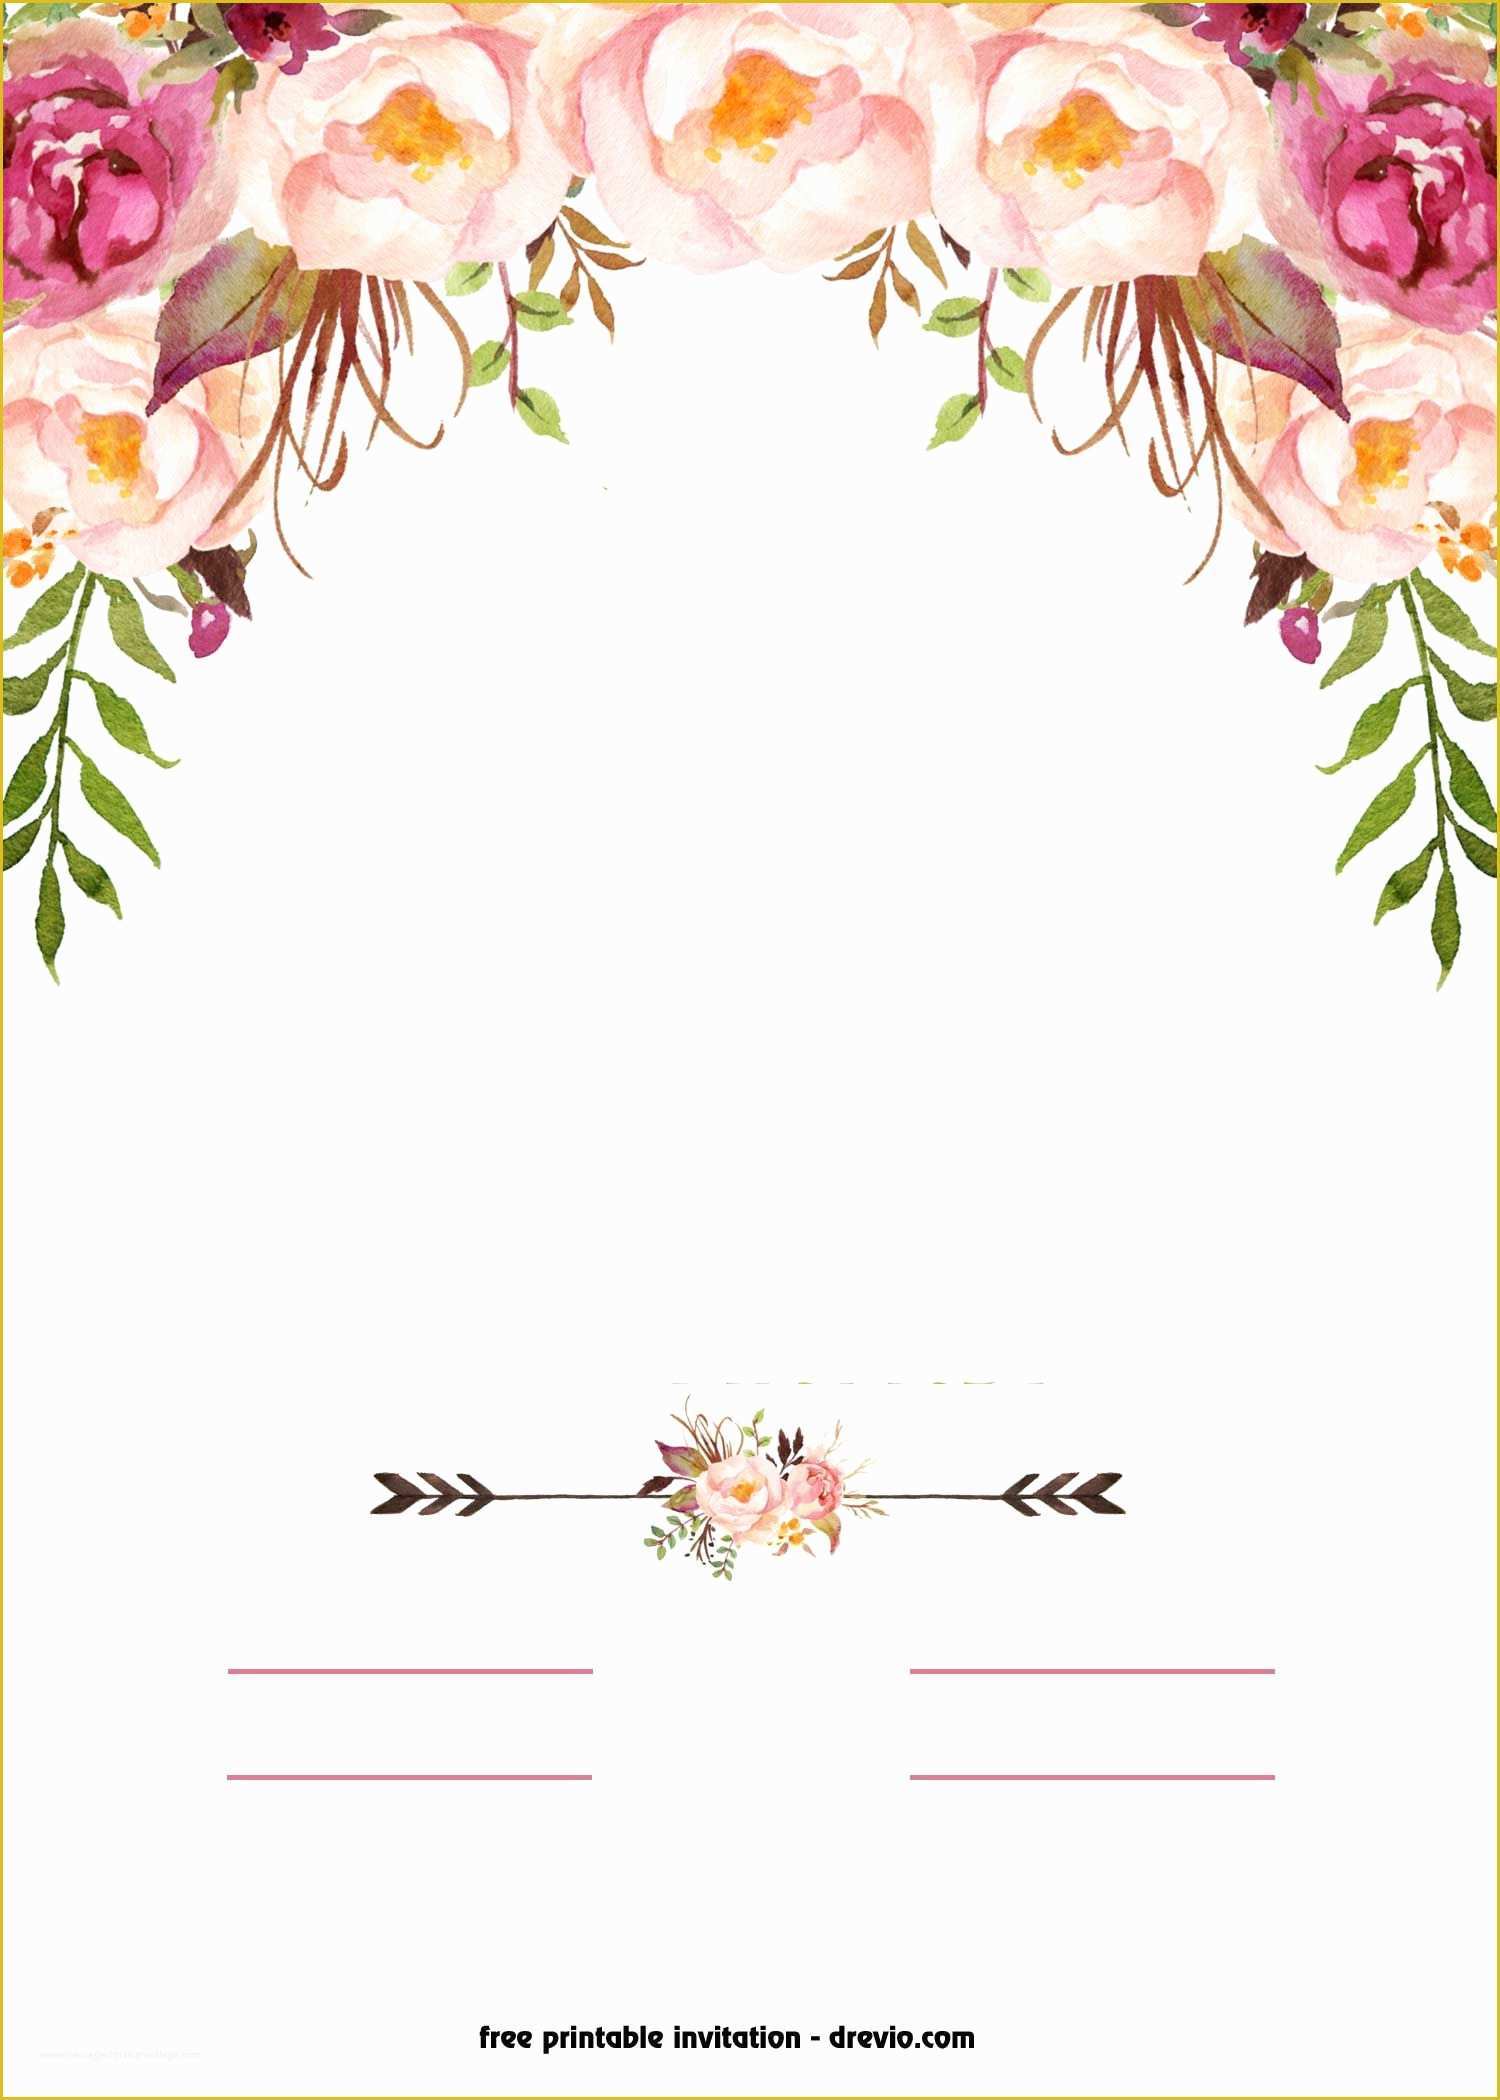 Free Wedding Design Templates Of Free Printable Boho Chic Flower Baby Shower Invitation